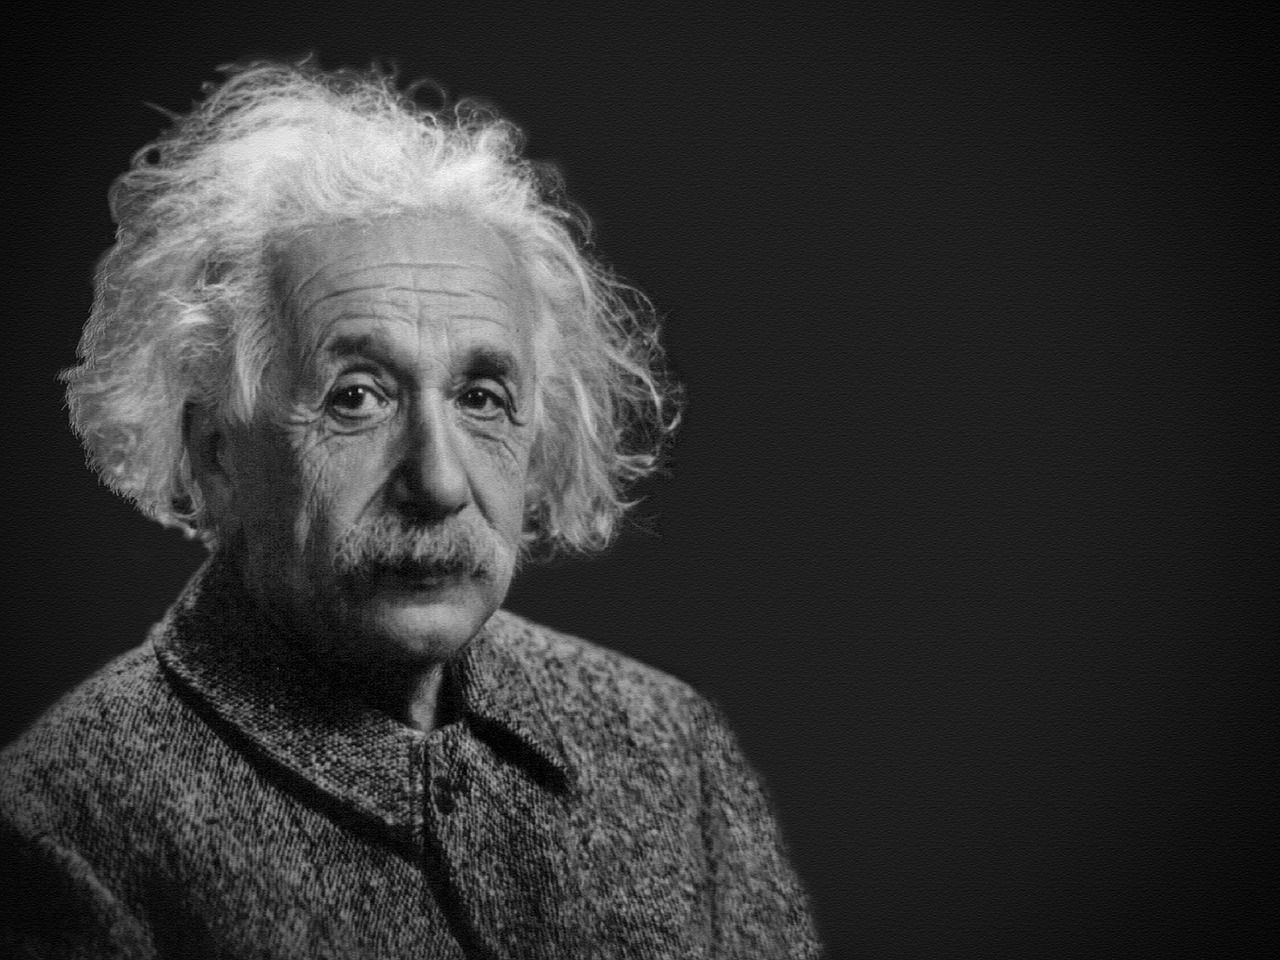 Portret Alberta Einsteina na czarnym tle